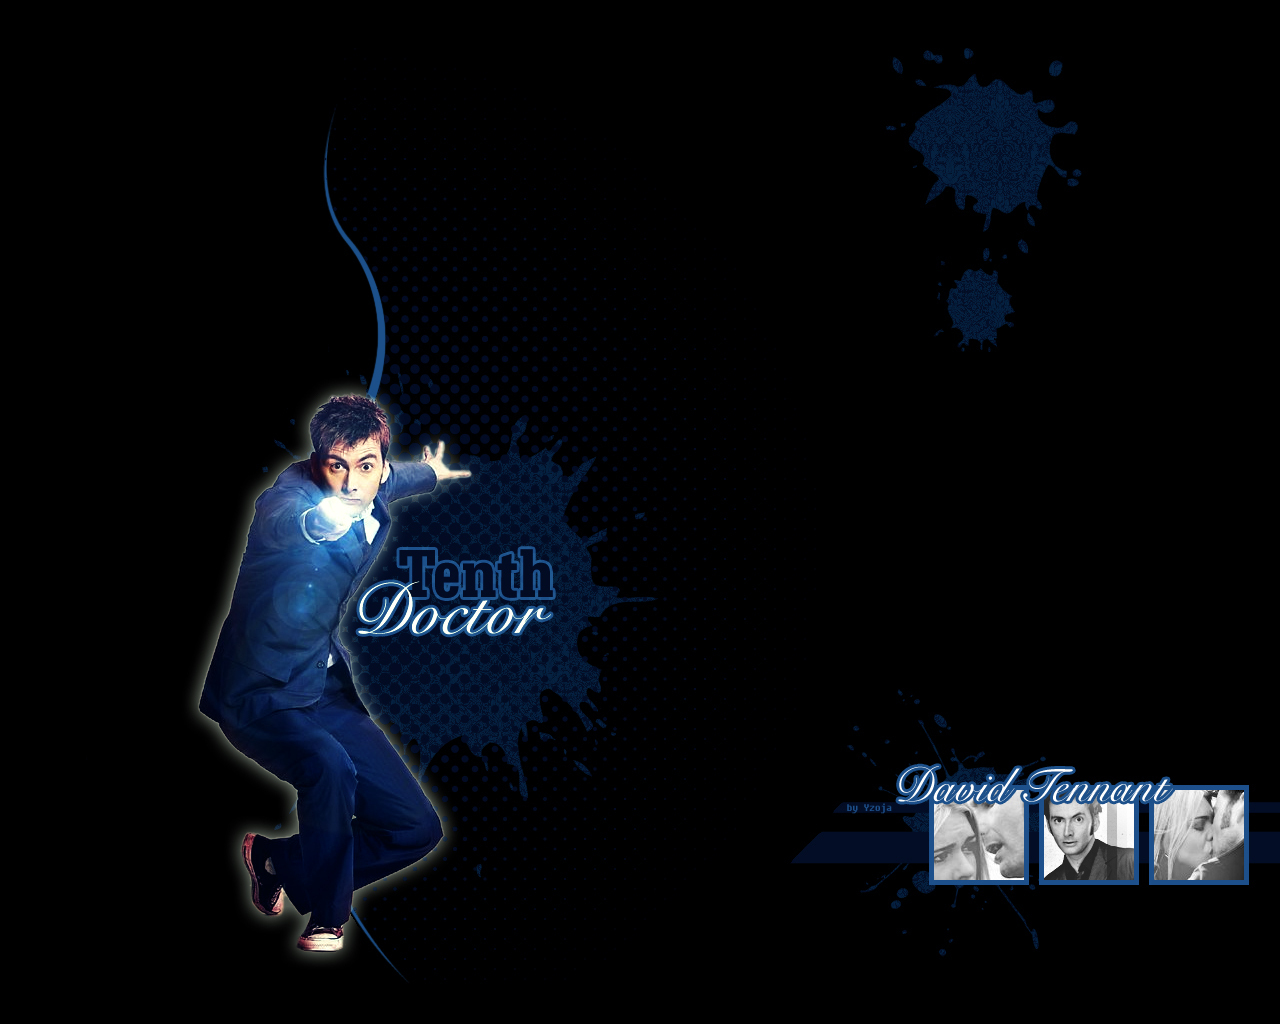 Doctor+who+wallpaper+david+tennant